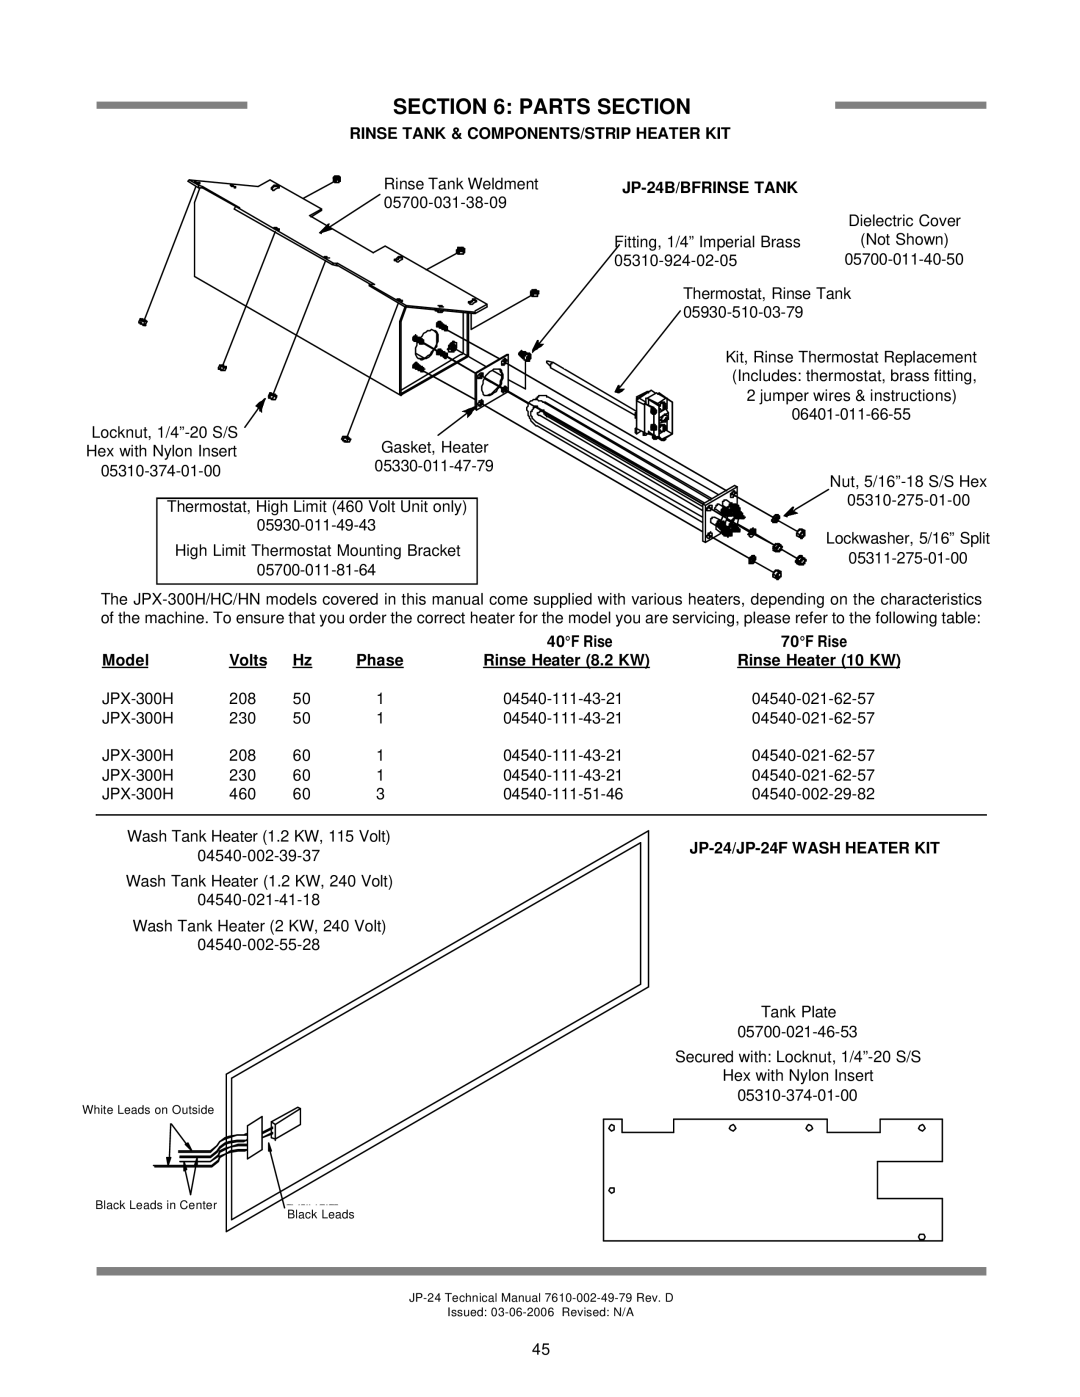 Jackson JP-24BF, jp-24b Rinse Tank & Components/Strip Heater Kit, JP-24B/BFRINSE TANK, 40F Rise, Model, Volts, Phase 